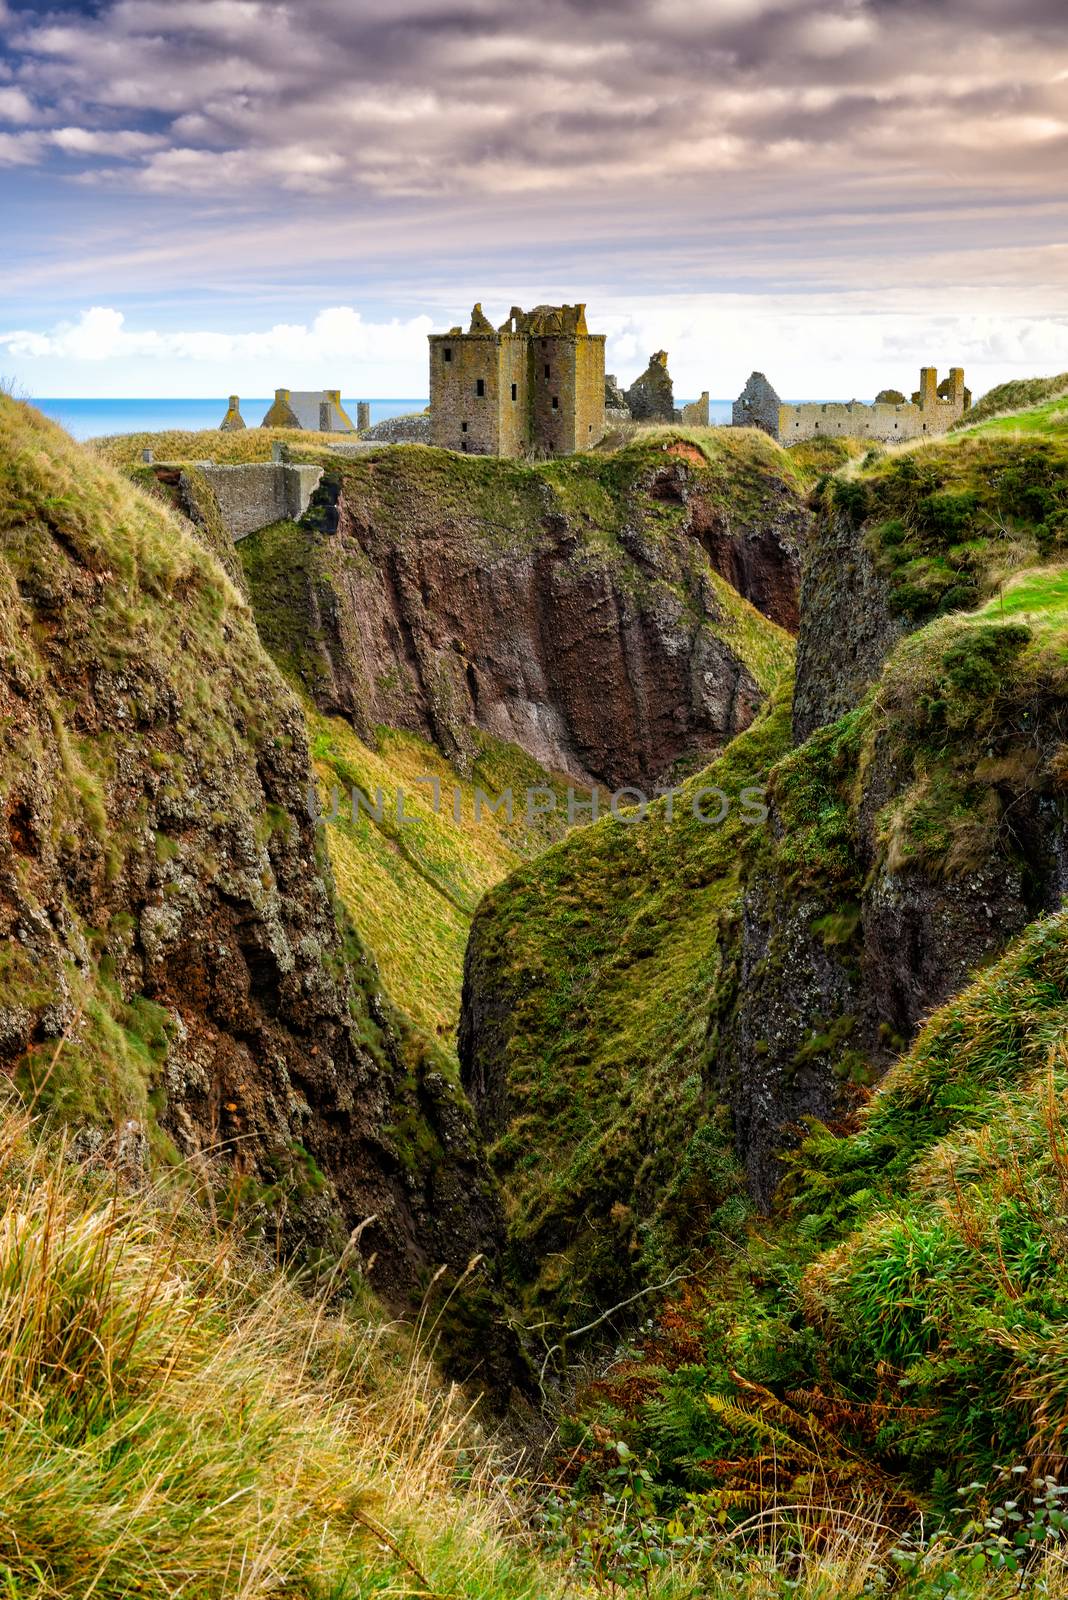 Dunnottar Castle near Stonehaven in Aberdeenshire, Scotland. by numskyman